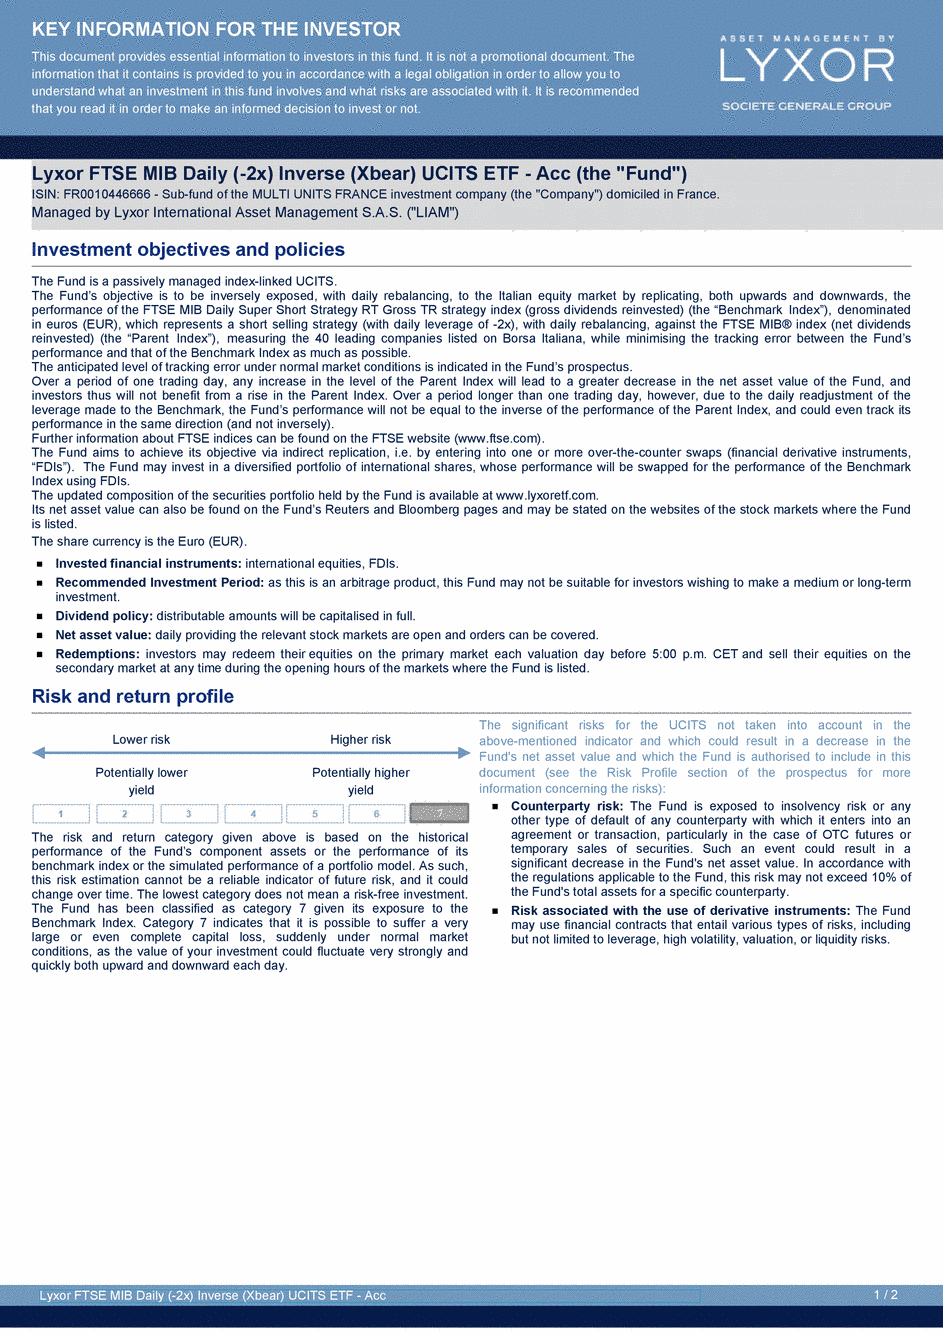 DICI Lyxor FTSE MIB Daily (-2x) Inverse (Xbear) UCITS ETF - Acc - 19/02/2021 - Anglais